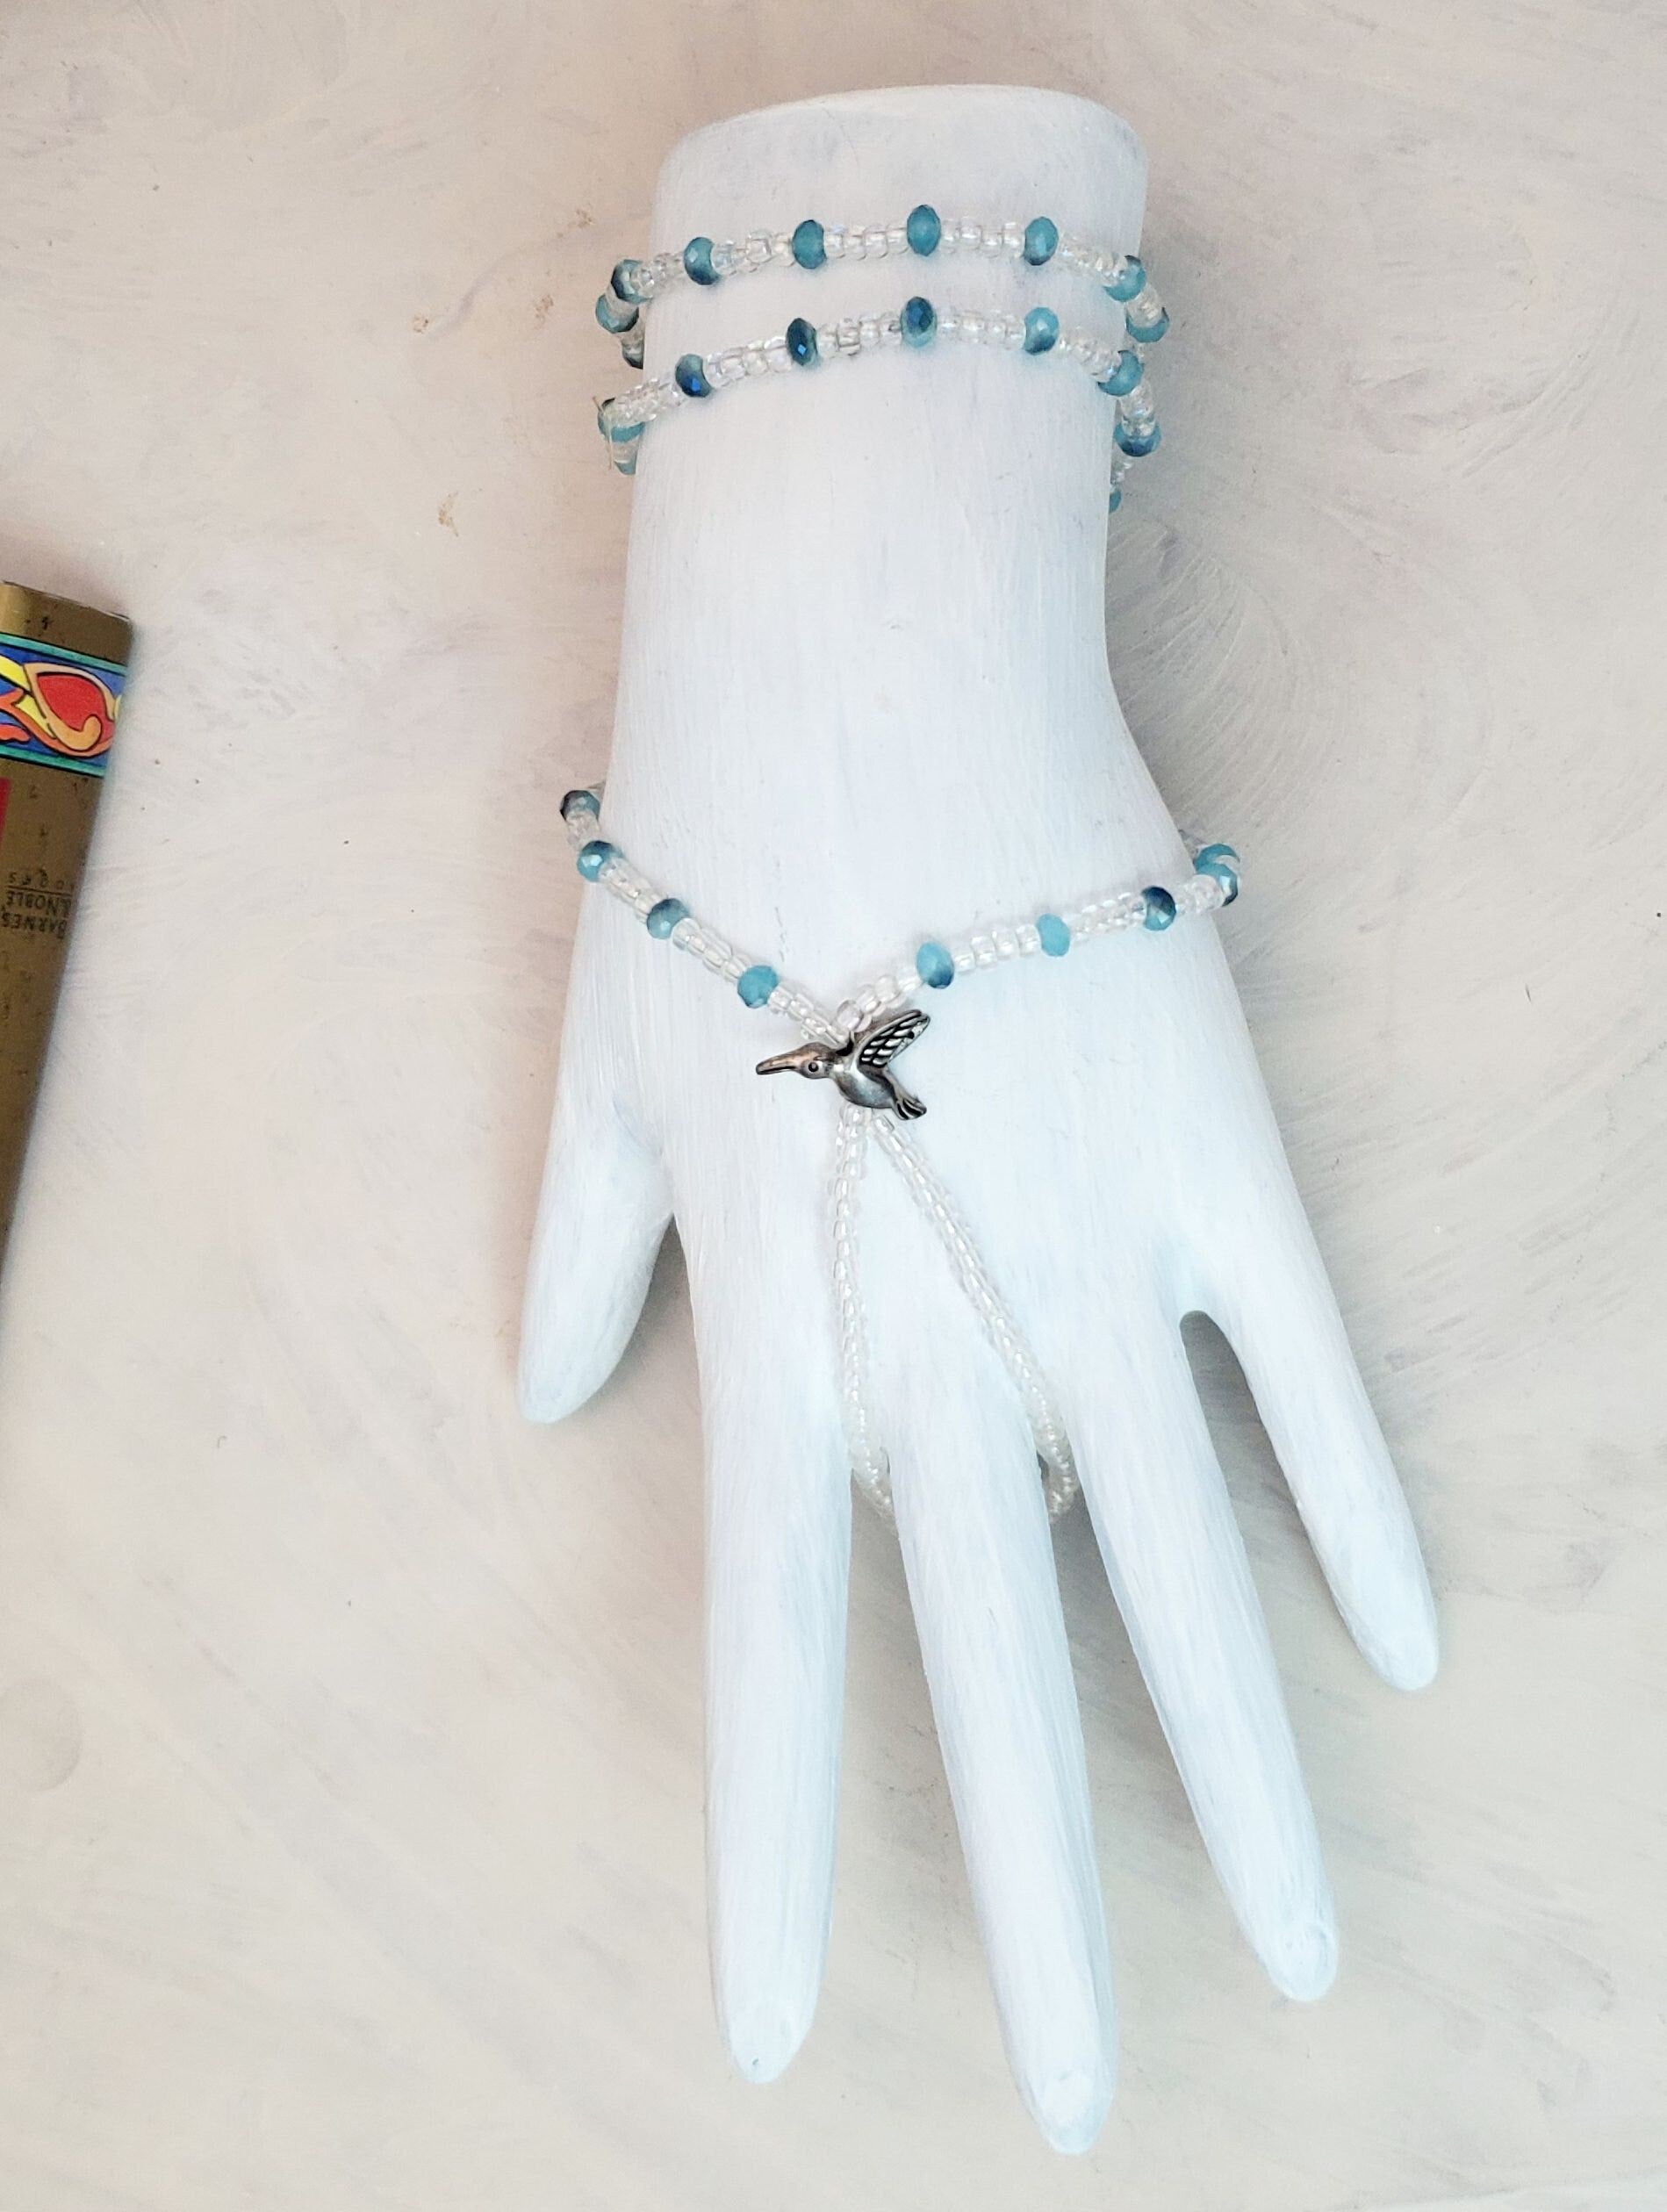 Elastic Beaded Barefoot Sandal or Hand Flower in Clear + Aqua Blue w/Hummingbird, Boho, Bohemian, Gypsy, Wedding, Bridesmaid, Shiny Beads